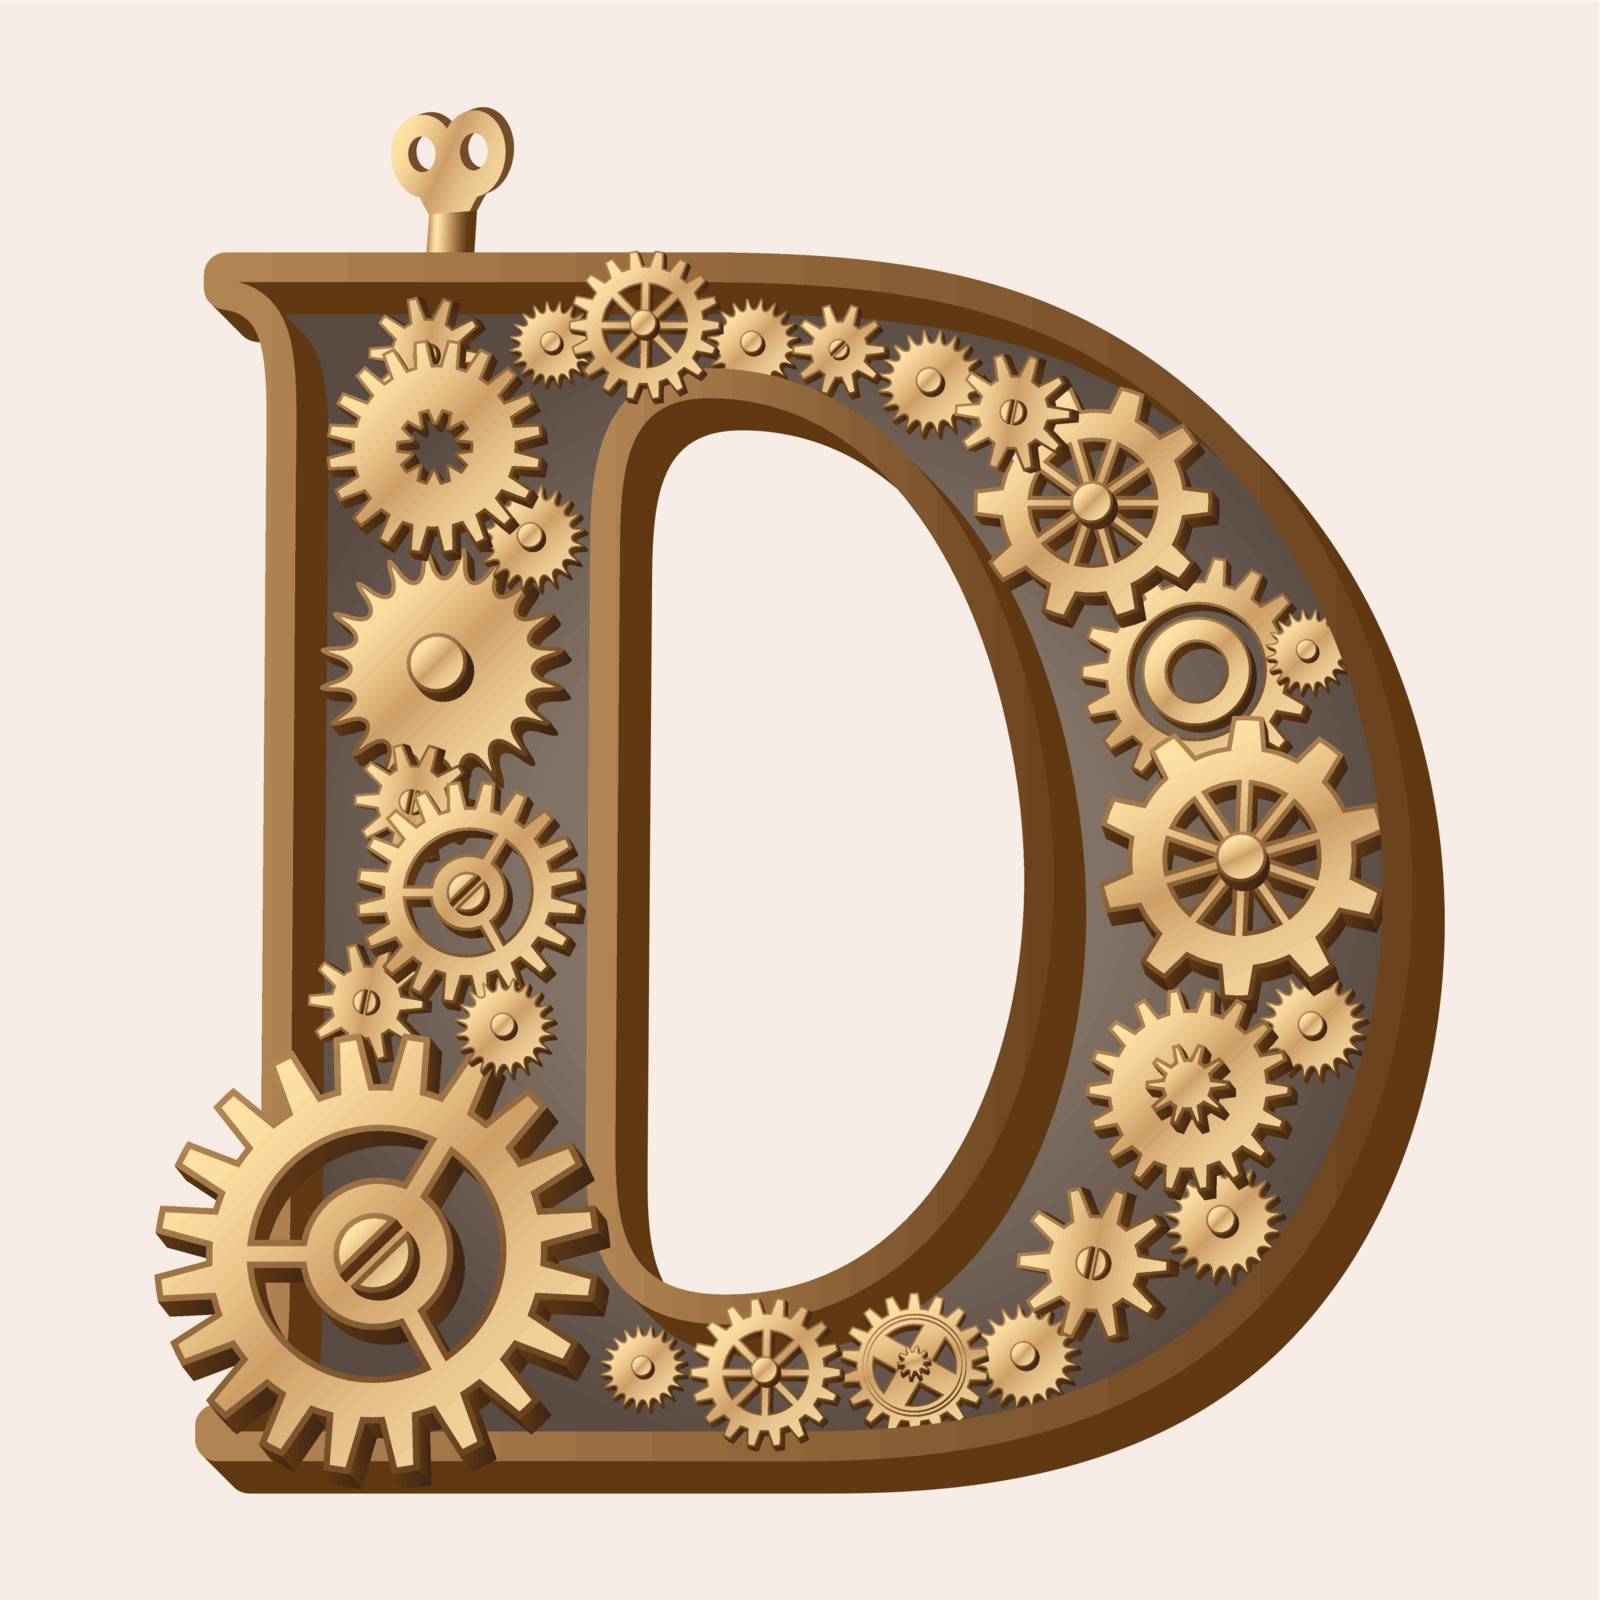 Mechanical alphabet made from gears. Letter d